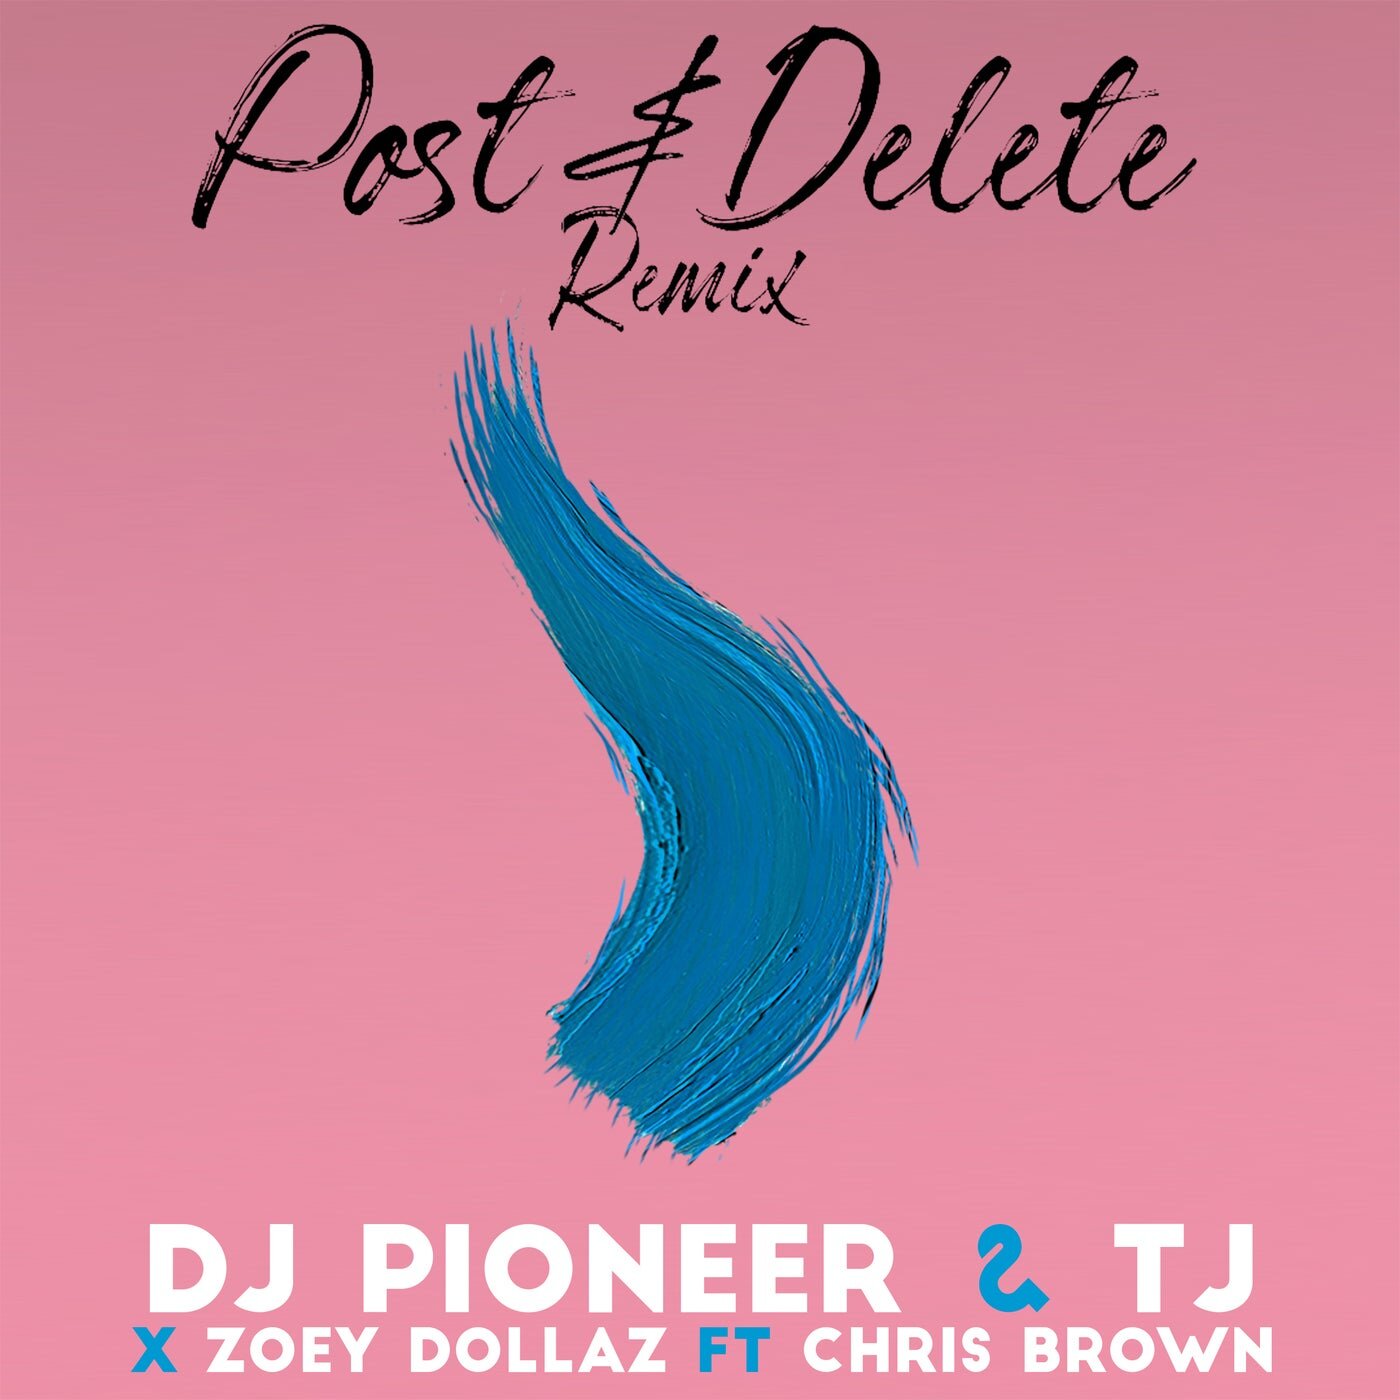 DJ Pioneer, TJ, Zoey Dollaz, Chris Brown - Post & Delete Remix